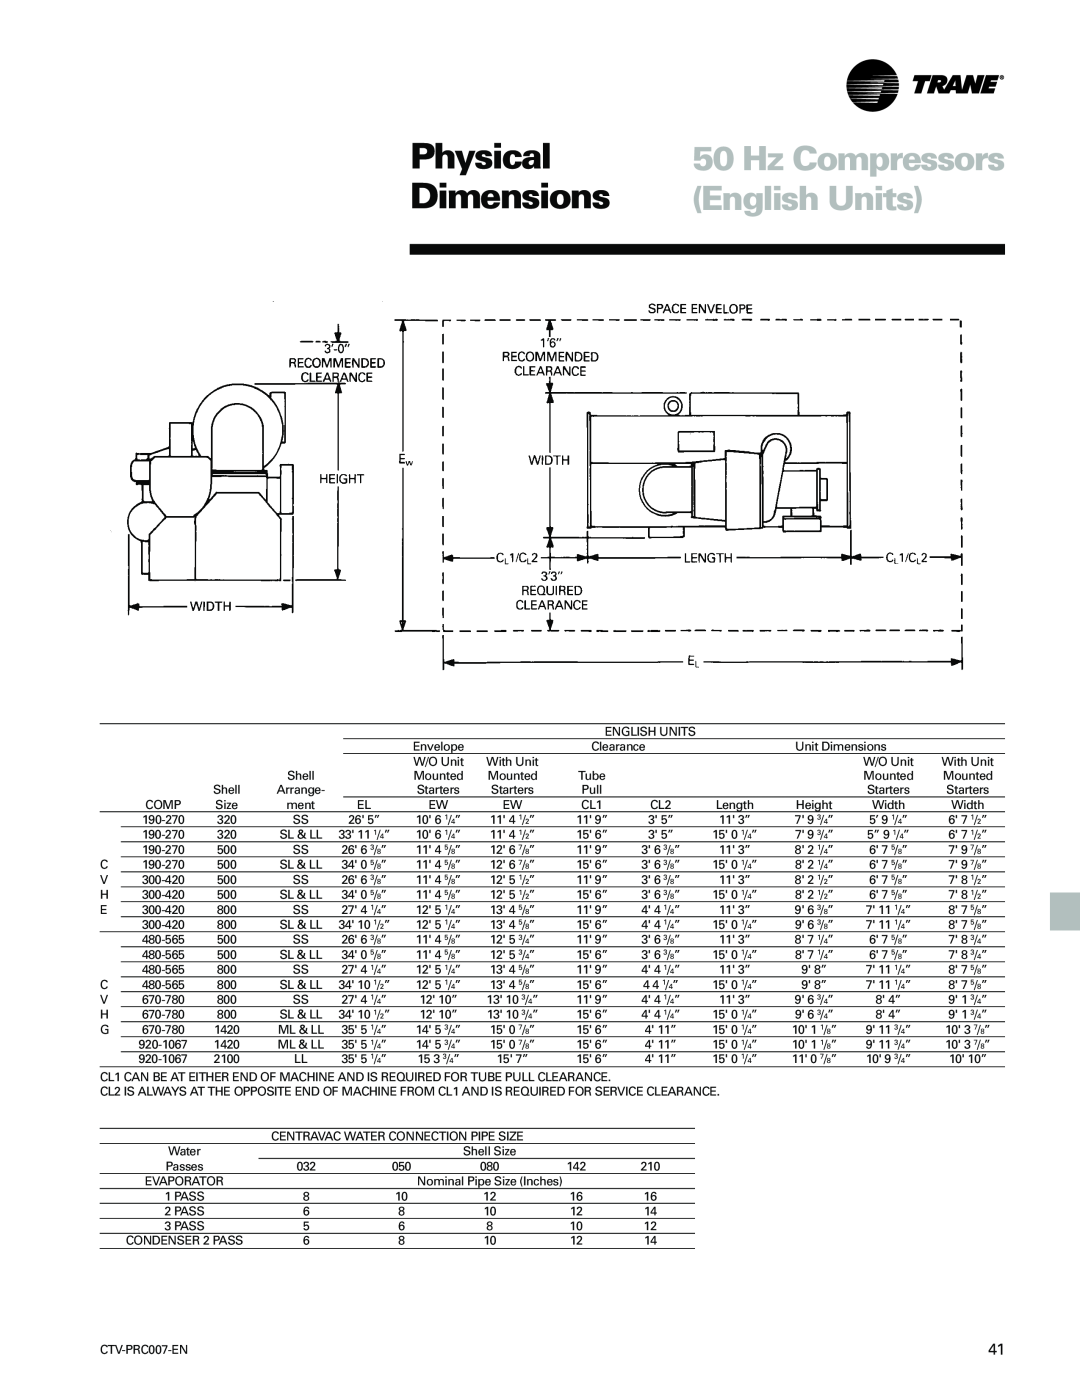 Trane ctv-prc007-en manual Physical, Dimensions, English Units, Hz Compressors 